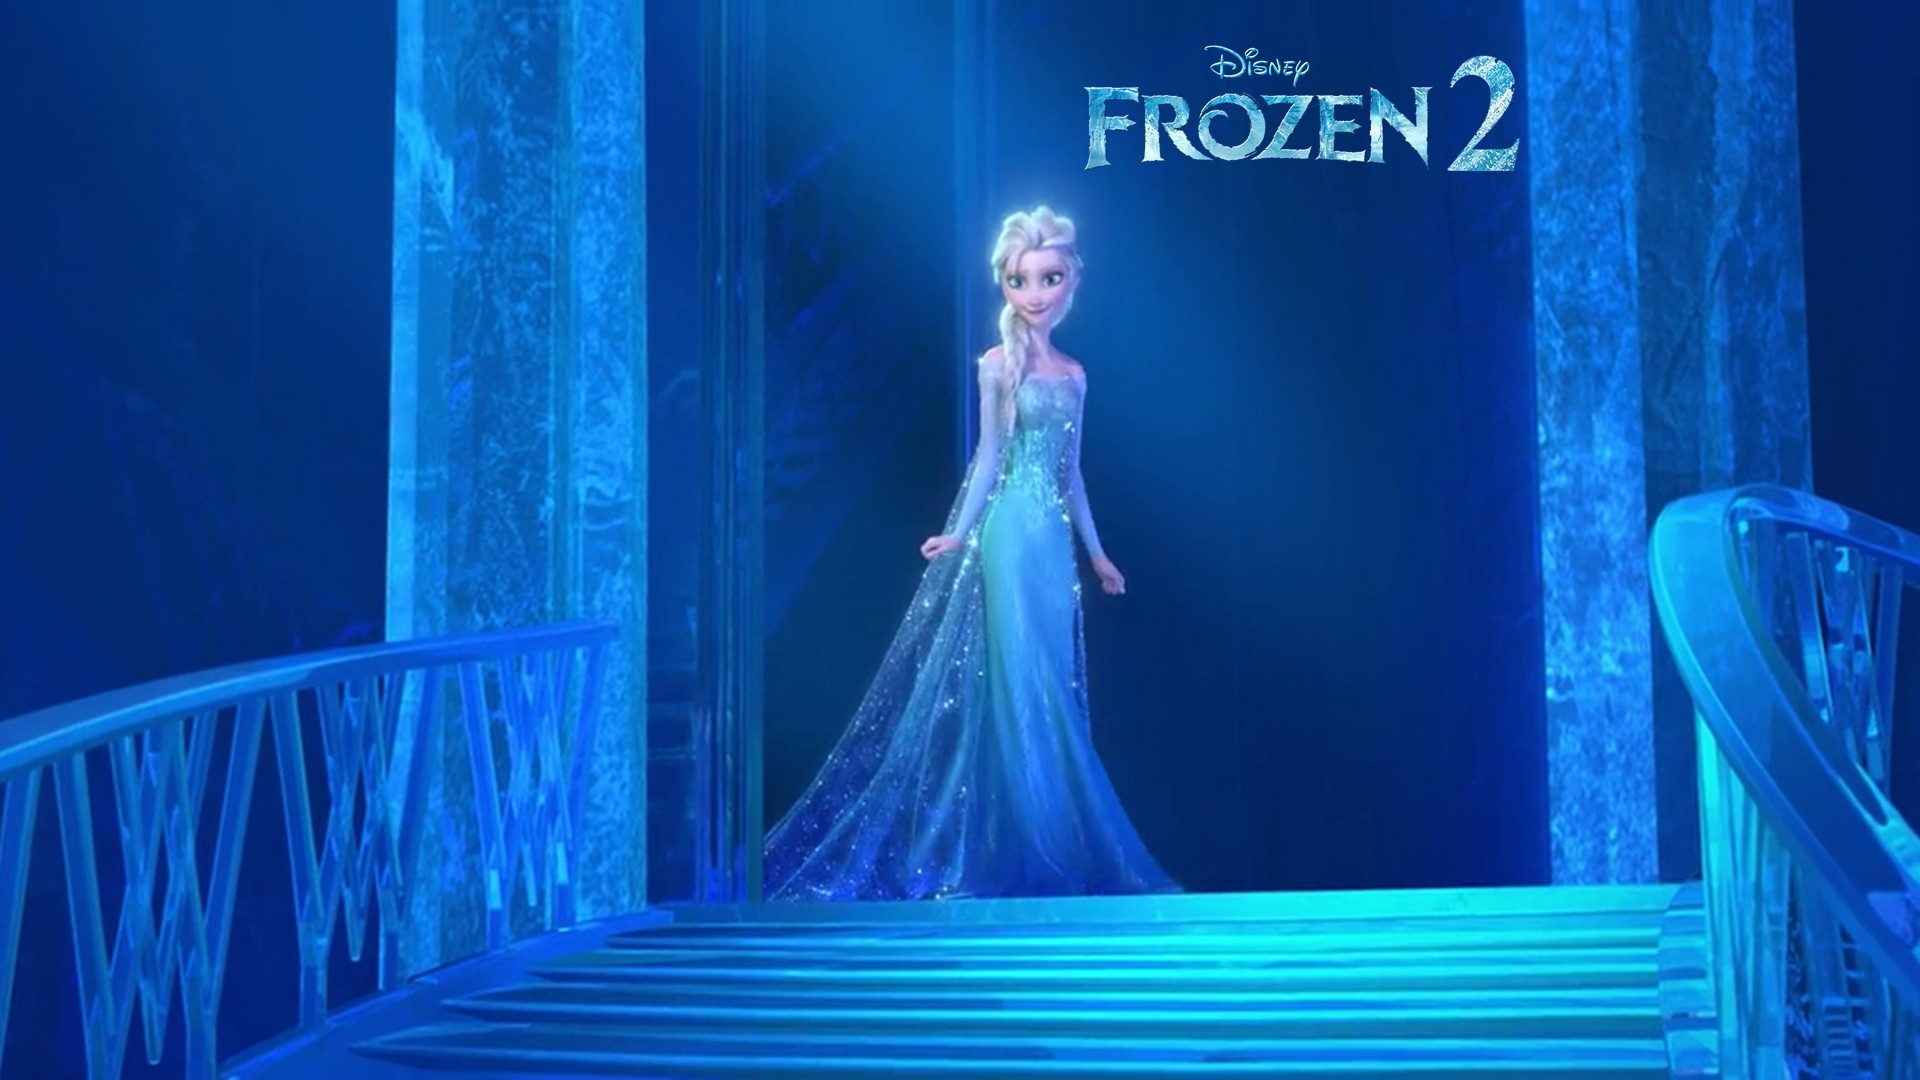 Elsa Frozen Wallpapers HD 